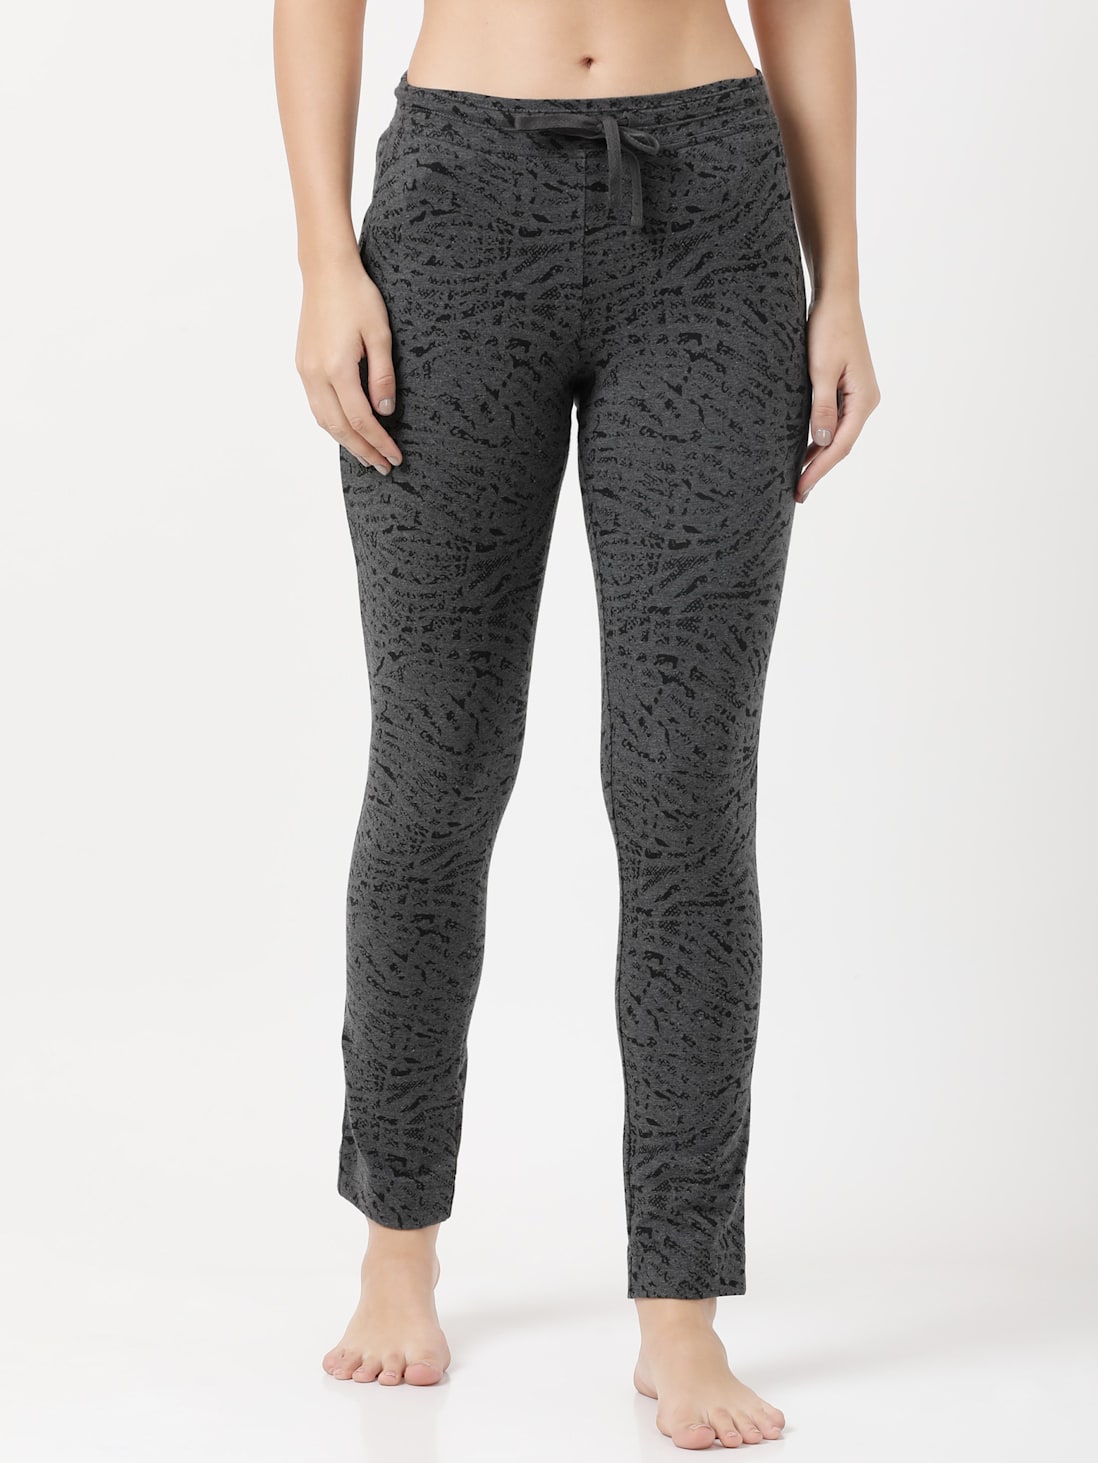 Buy Charcoal Melange Track Pants Online in India, Grey Pants